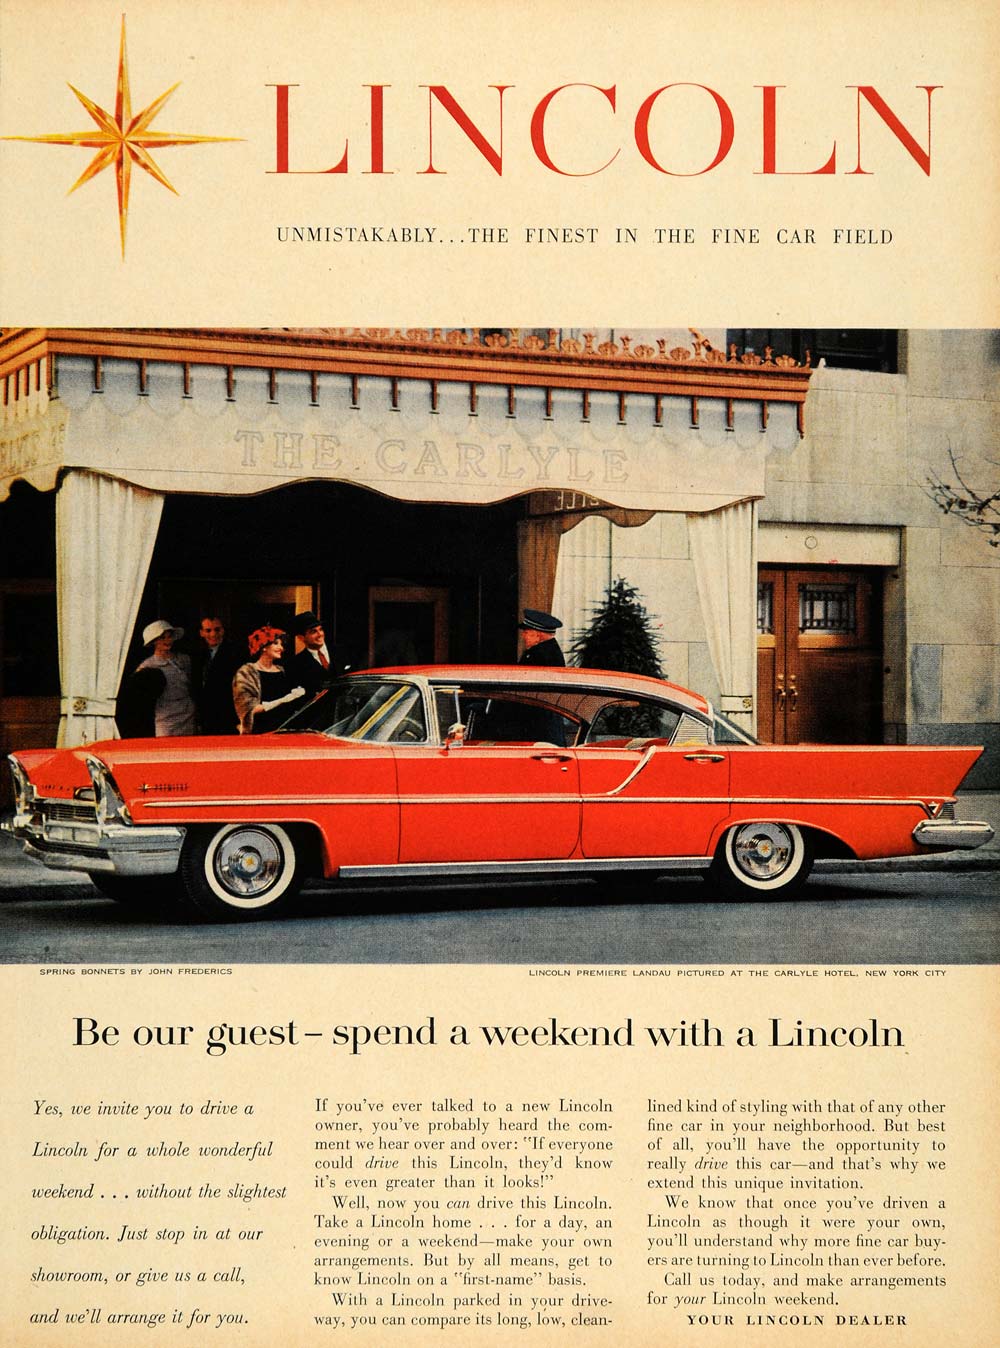 1957 Ad Red Lincoln Premiere Landau Car Carlyle Hotel - ORIGINAL ADVERTISING TM5